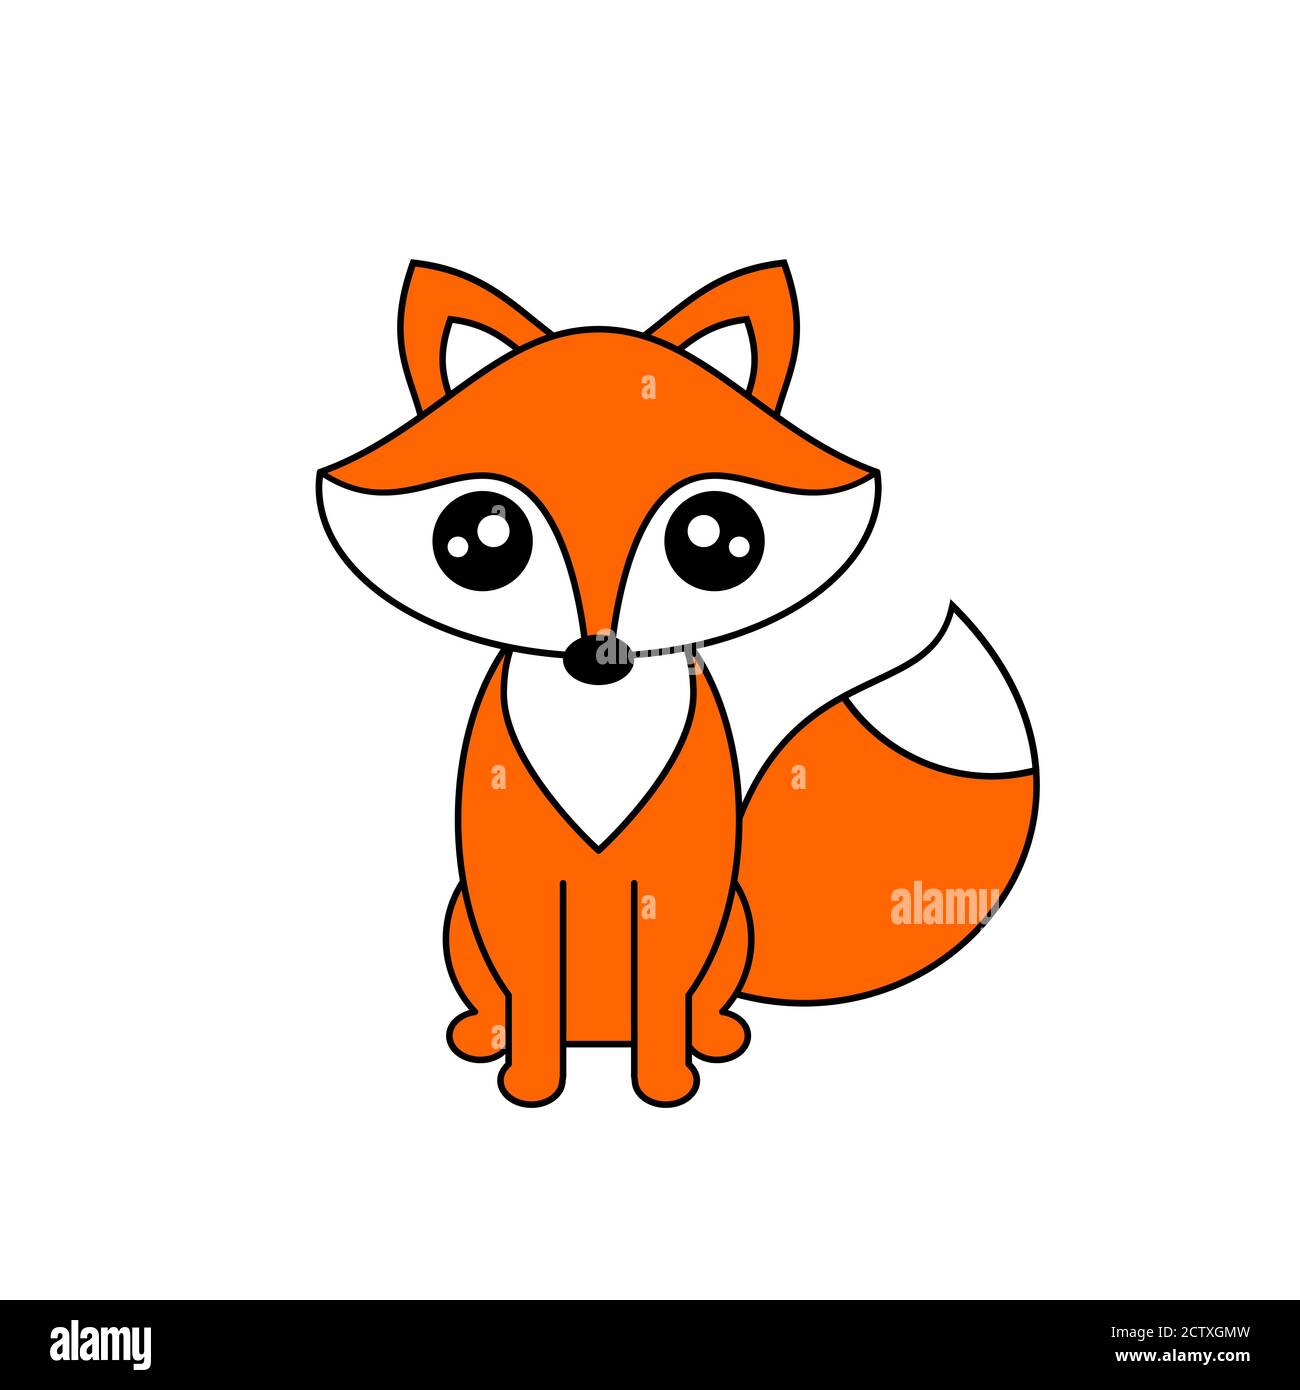 Cute Fox Cartoon Graphic by Yanart 92 · Creative Fabrica